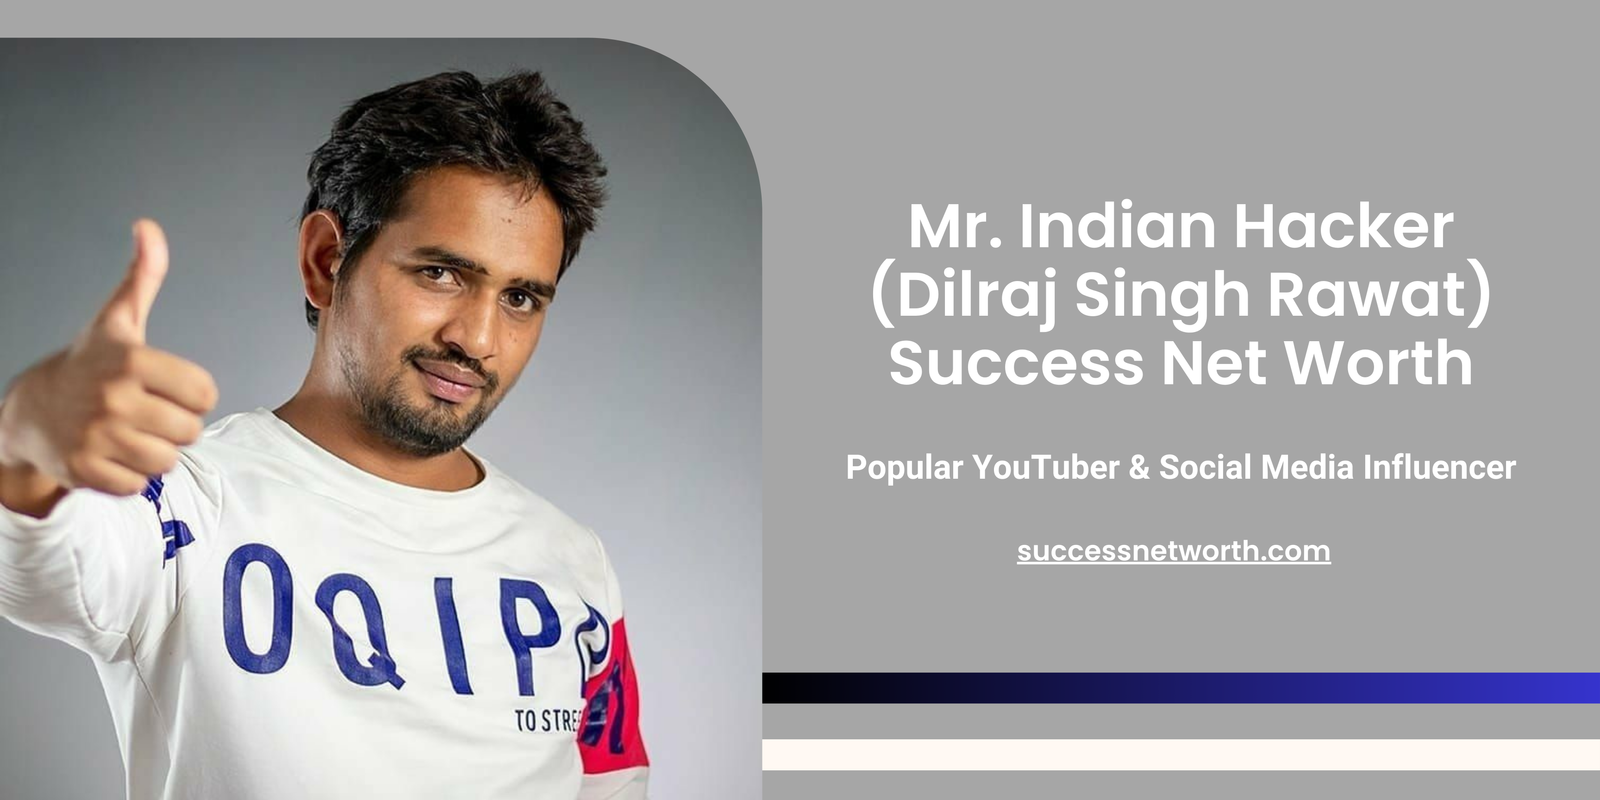 Mr. Indian Hacker Success Net Worth